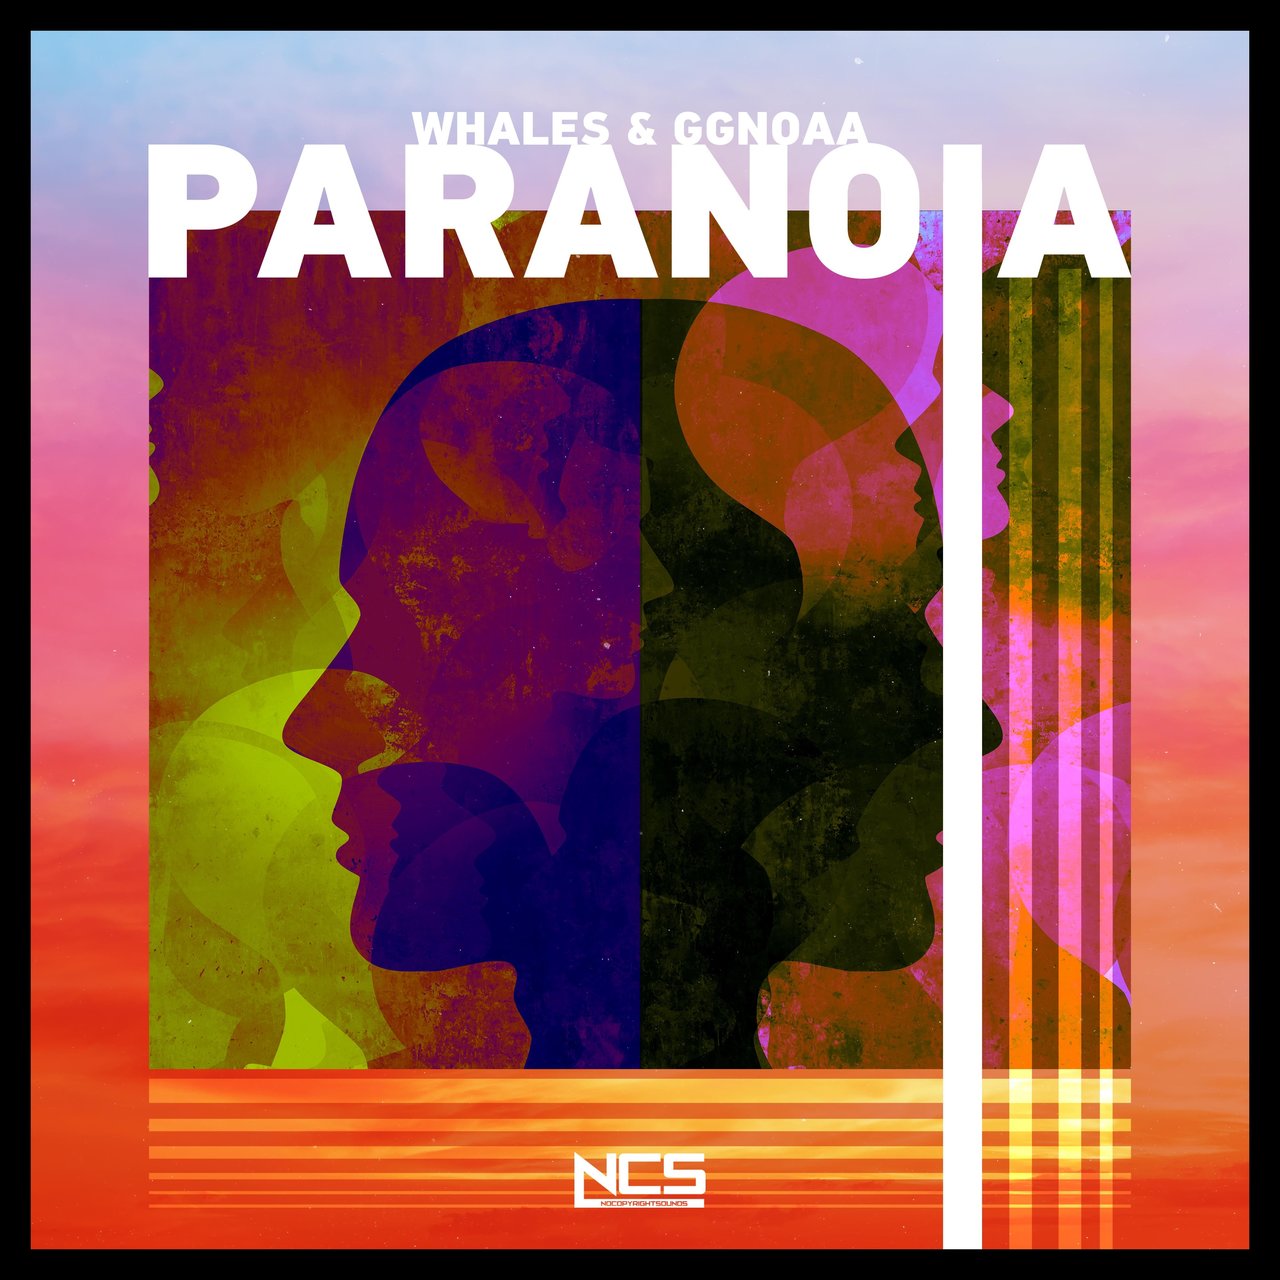 Whales & ggnoaa — Paranoia cover artwork